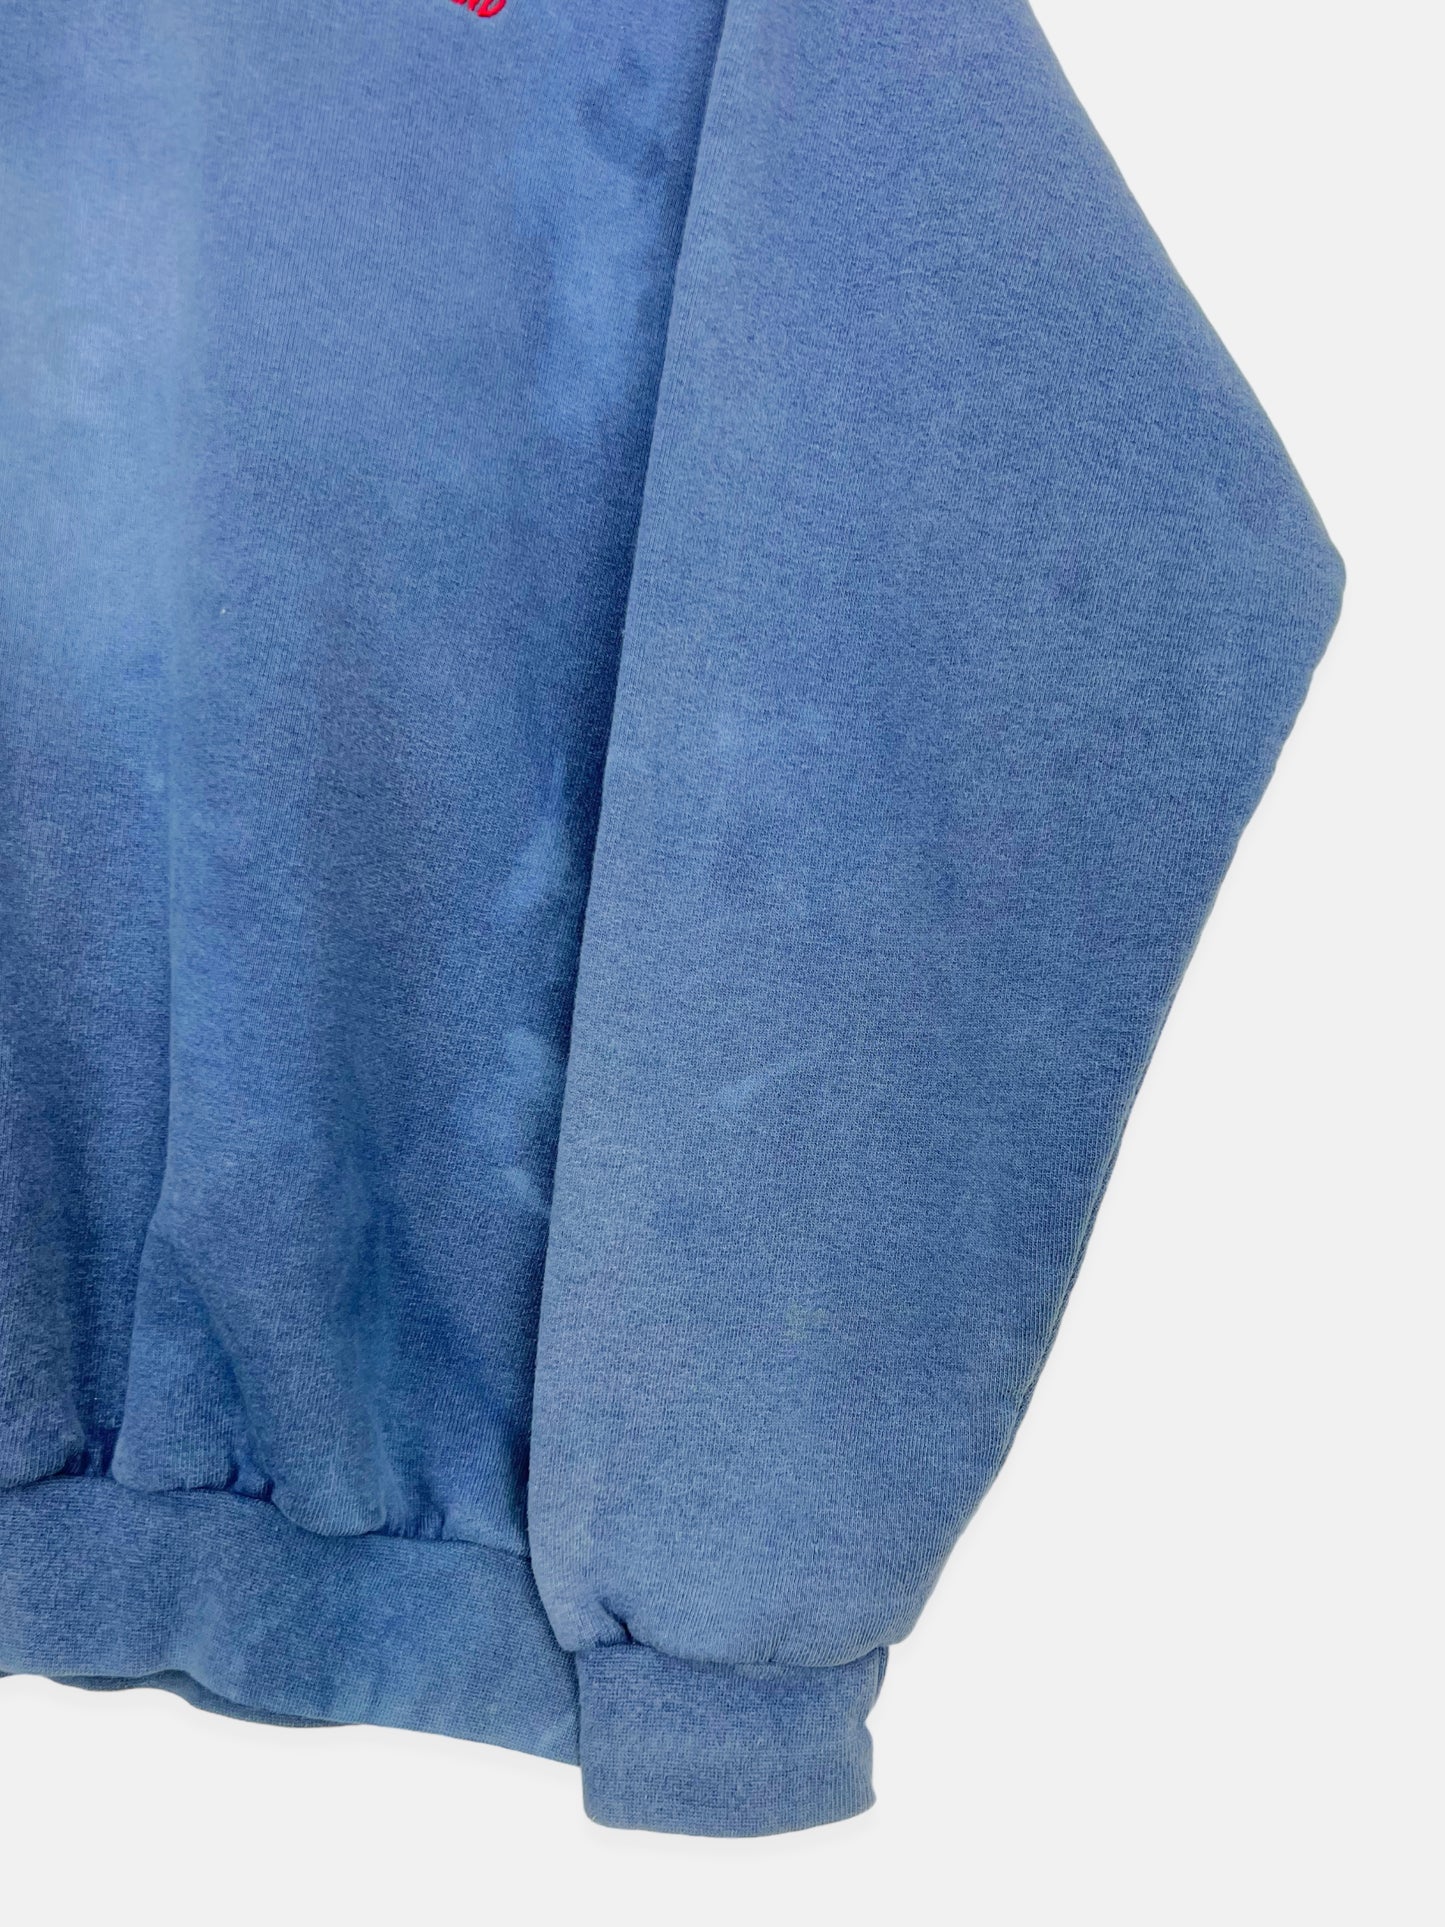 90's Newfoundland Canada Made Embroidered Vintage Sweatshirt Quarterzip Size M